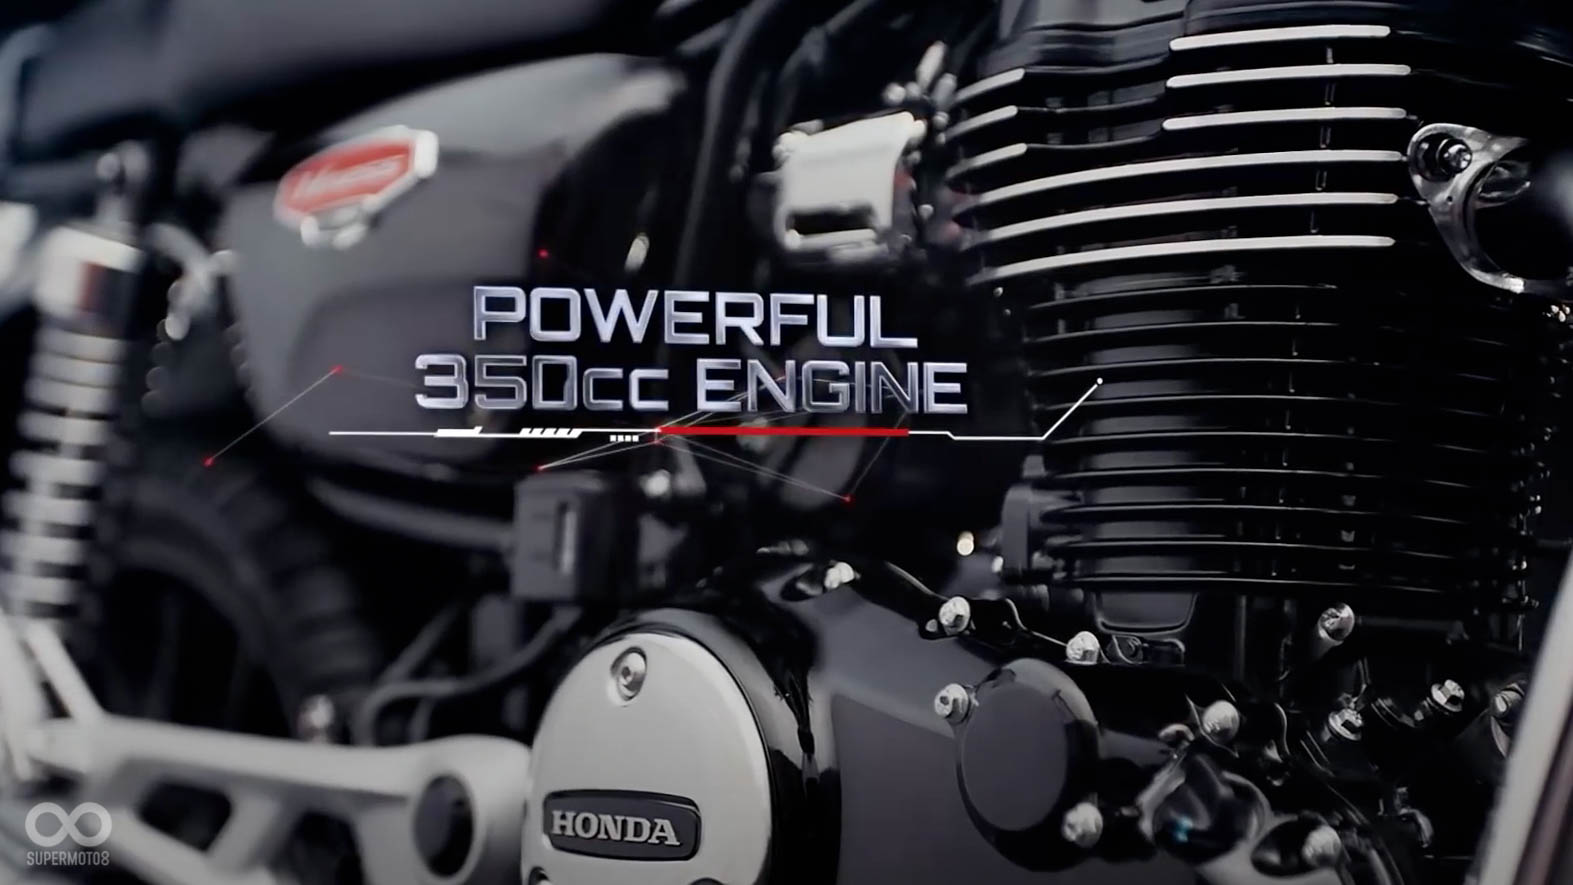 348c.c.空冷單缸引擎，擁有20.8HP @ 5,500RPM的最大馬力和30Nm @ 3,000RPM的最大扭力